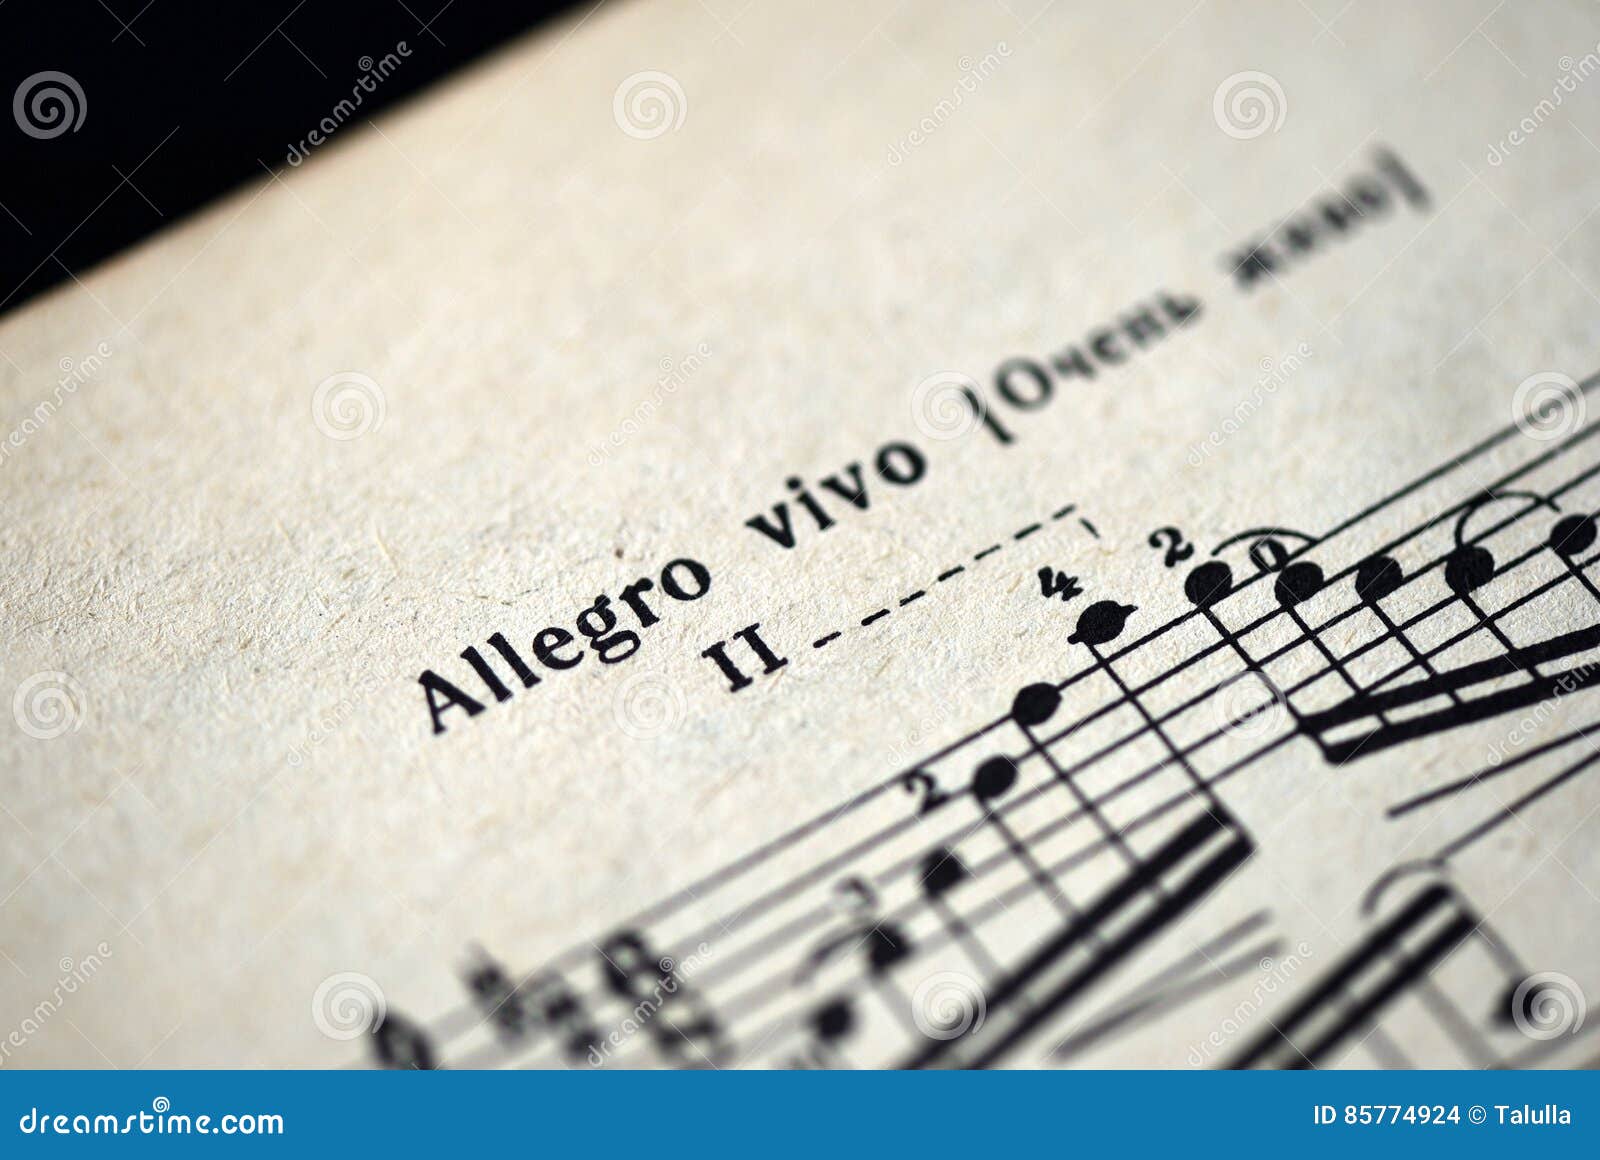 musical tempo `allegro vivo` in a music notebook